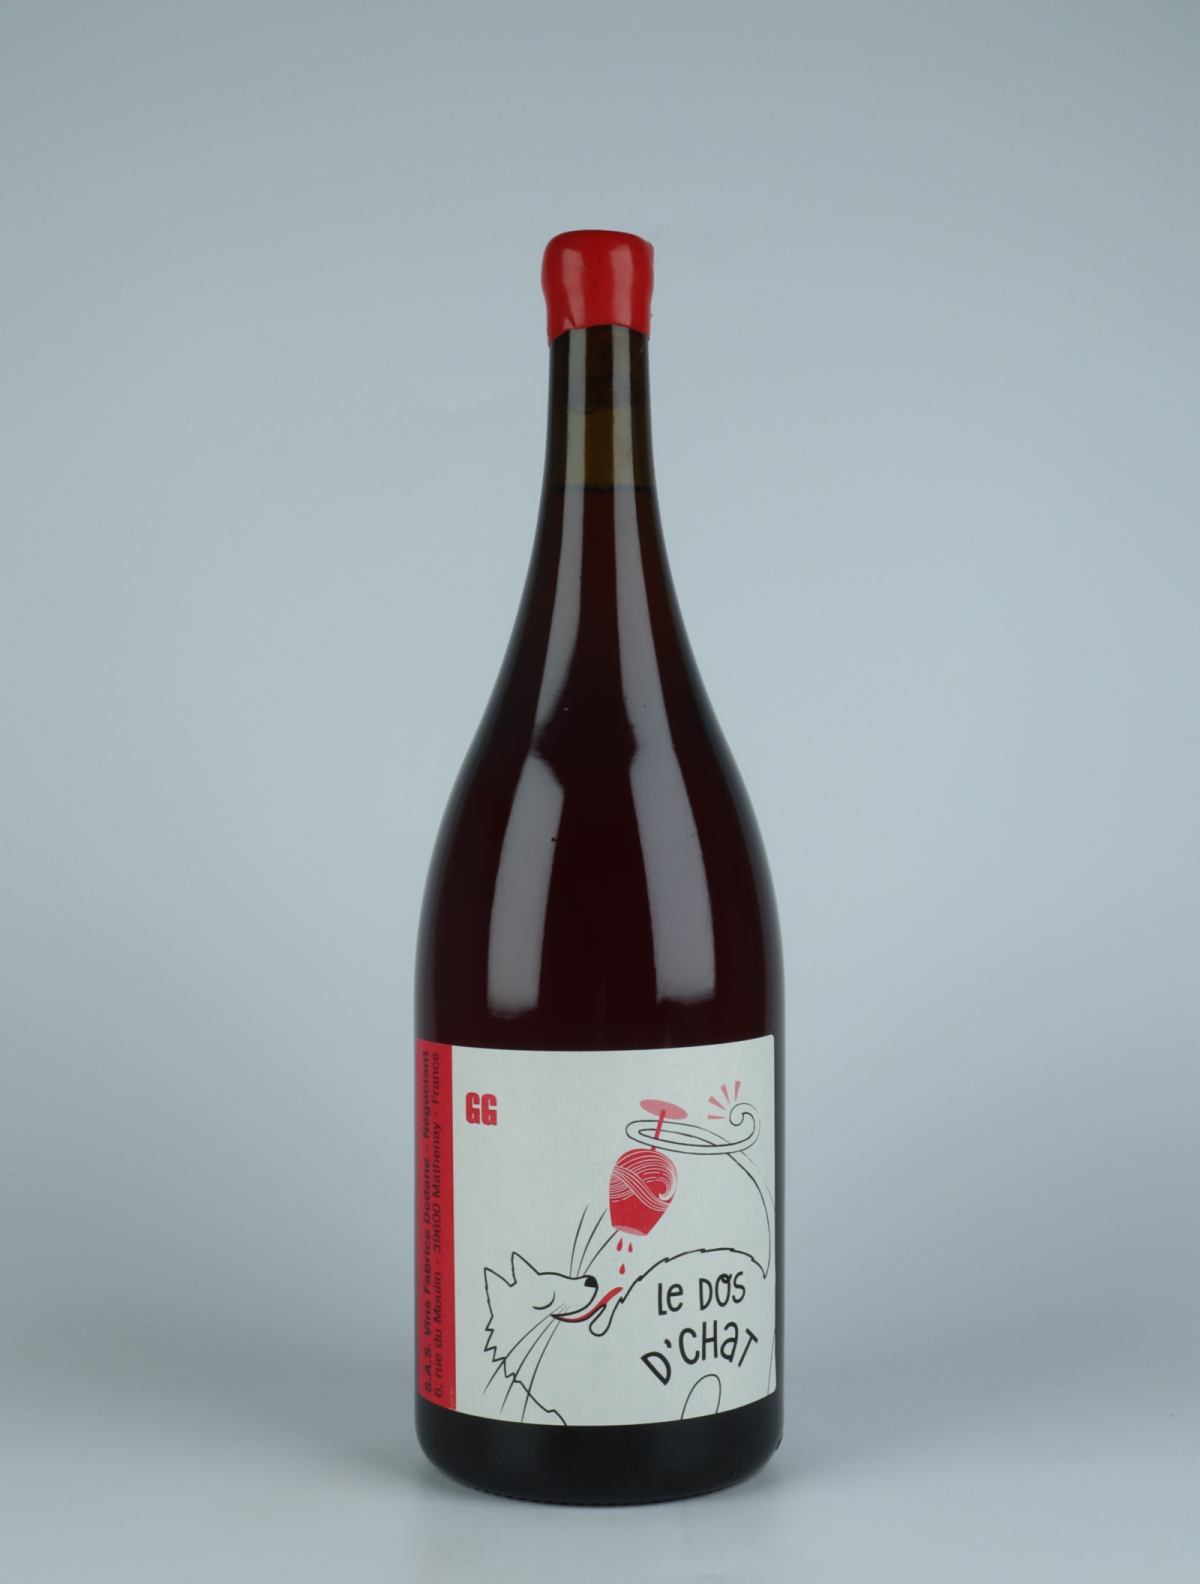 A bottle 2021 G.G. Rouge Red wine from Fabrice Dodane, Jura in France